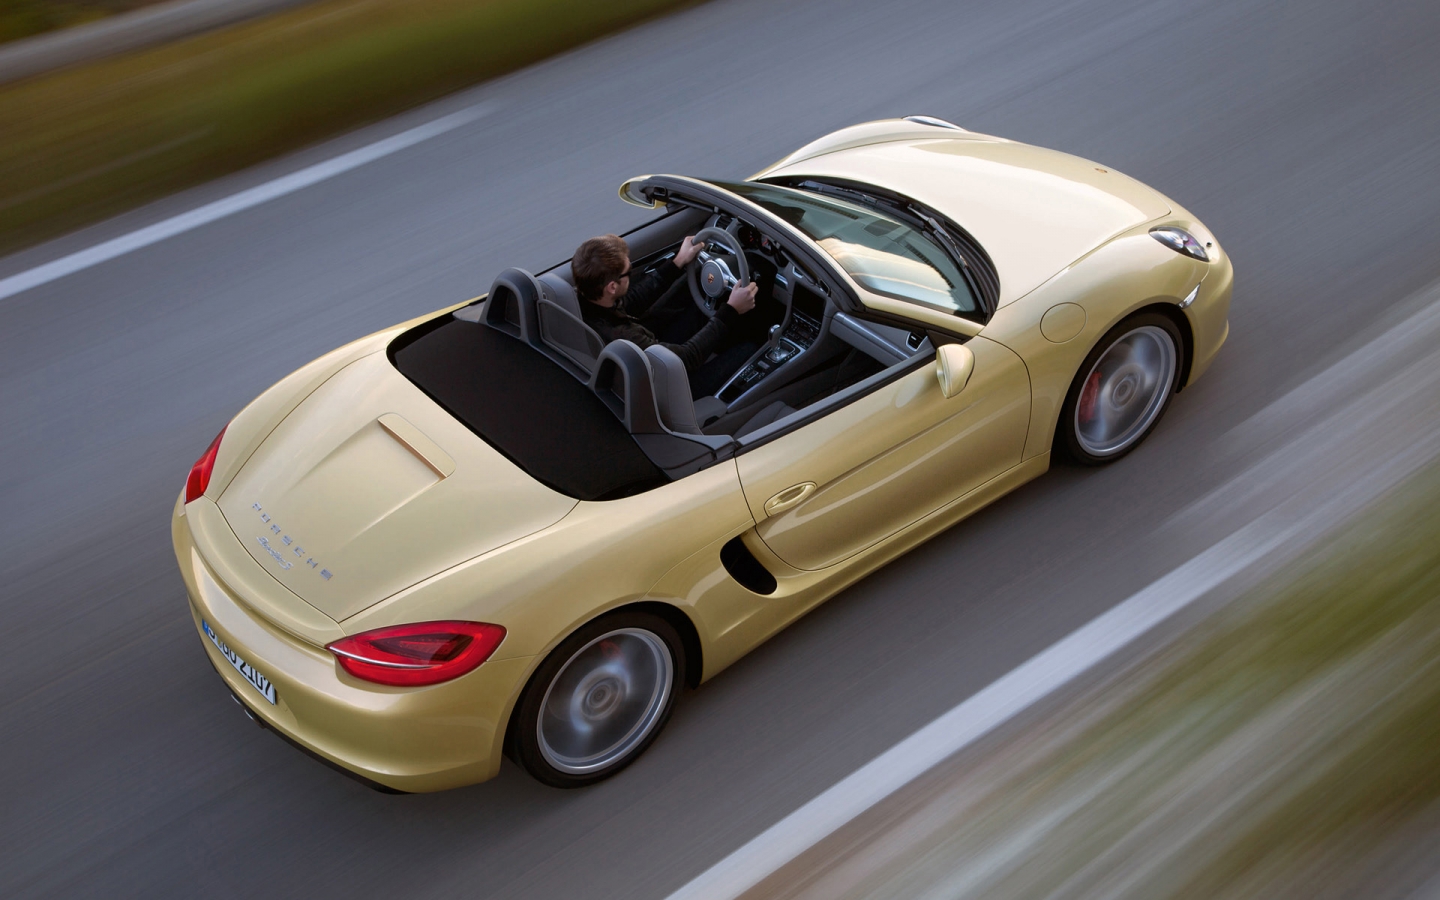 2013 Porsche Boxster Speed for 1440 x 900 widescreen resolution